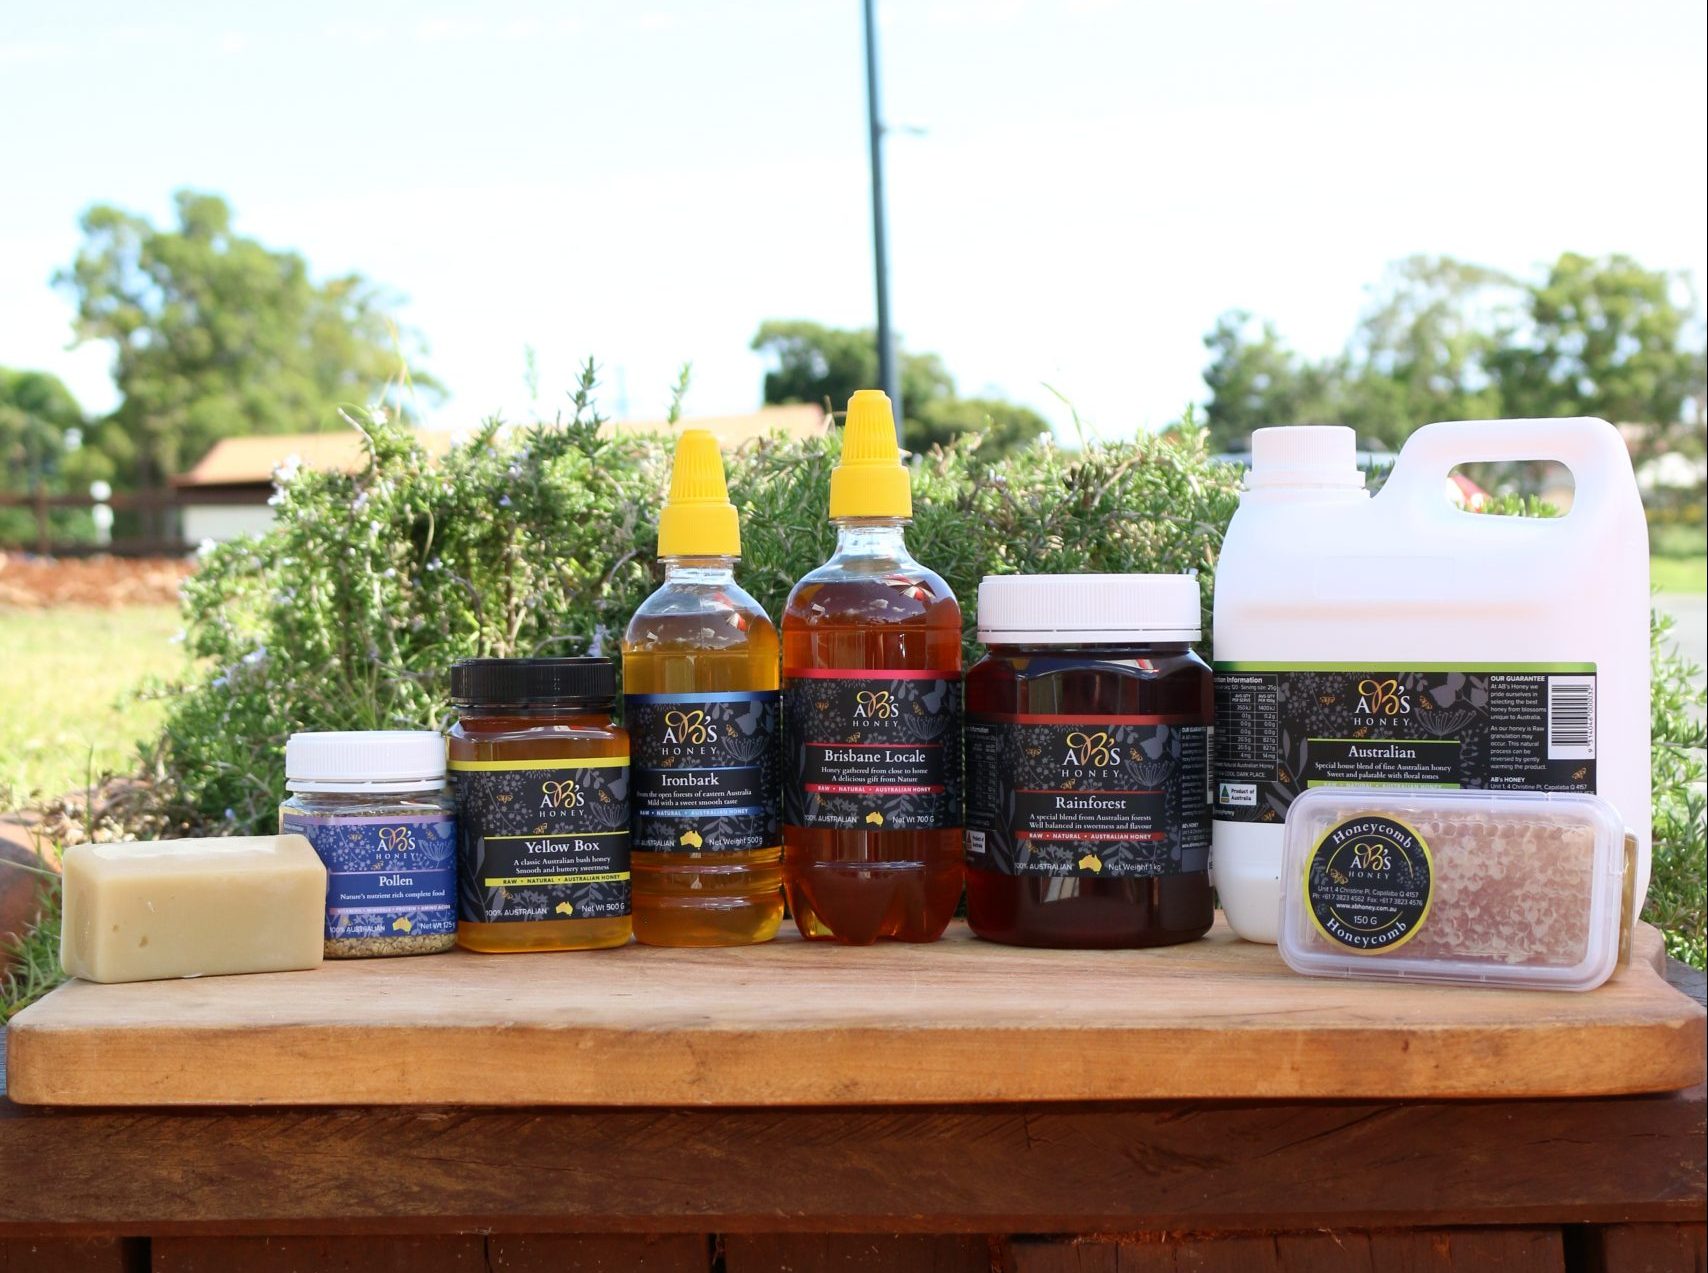 AB's Honey product group